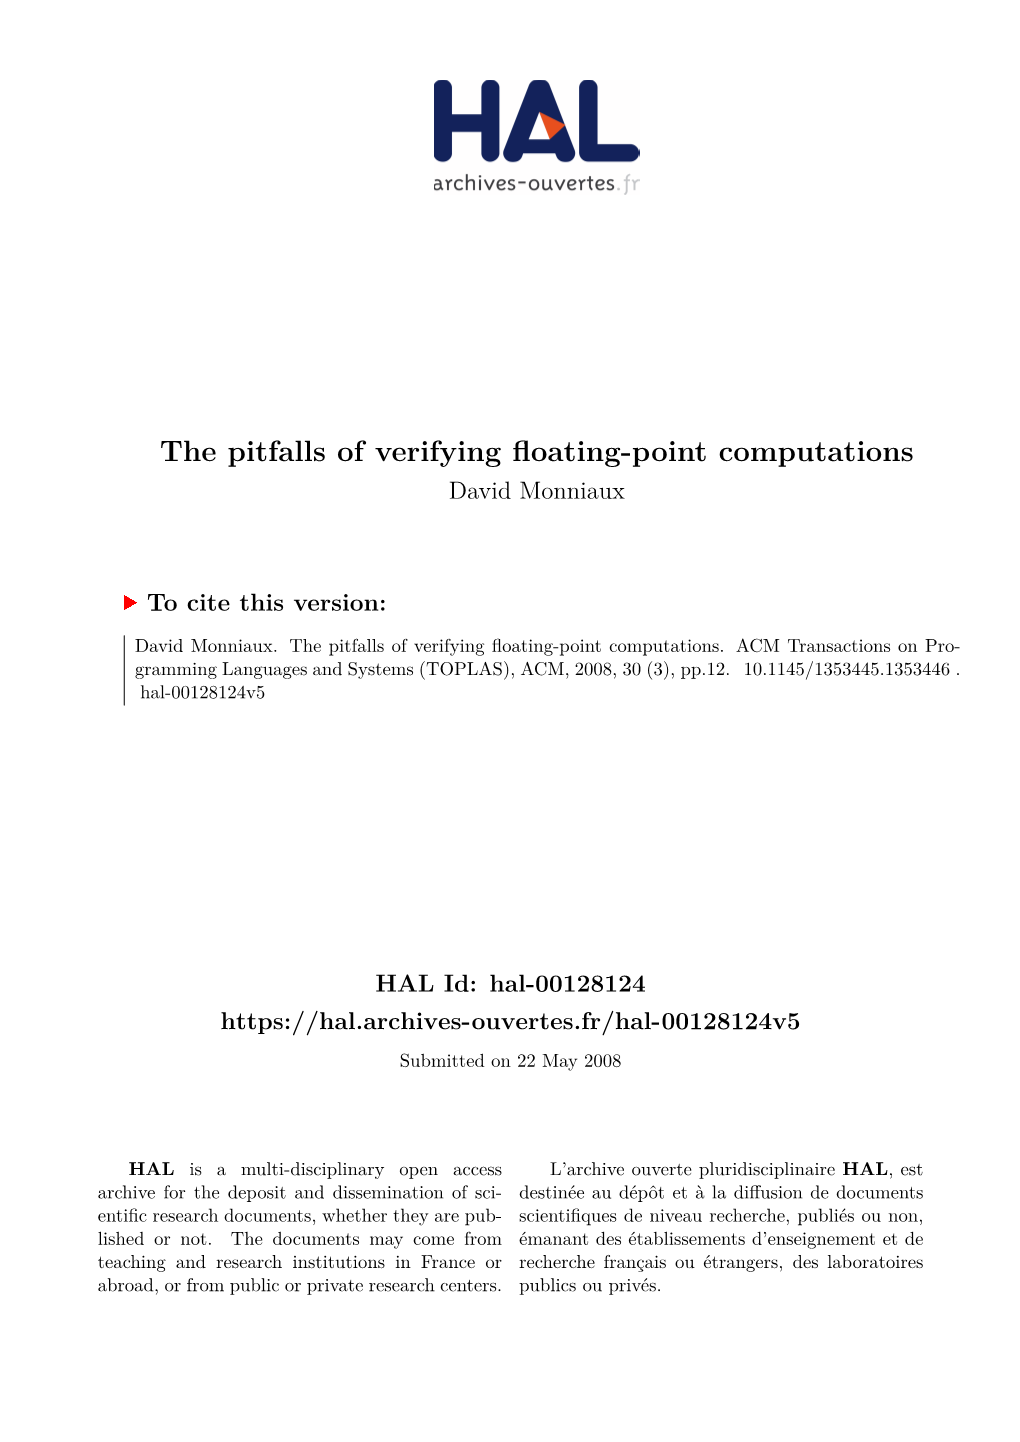 The Pitfalls of Verifying Floating-Point Computations David Monniaux